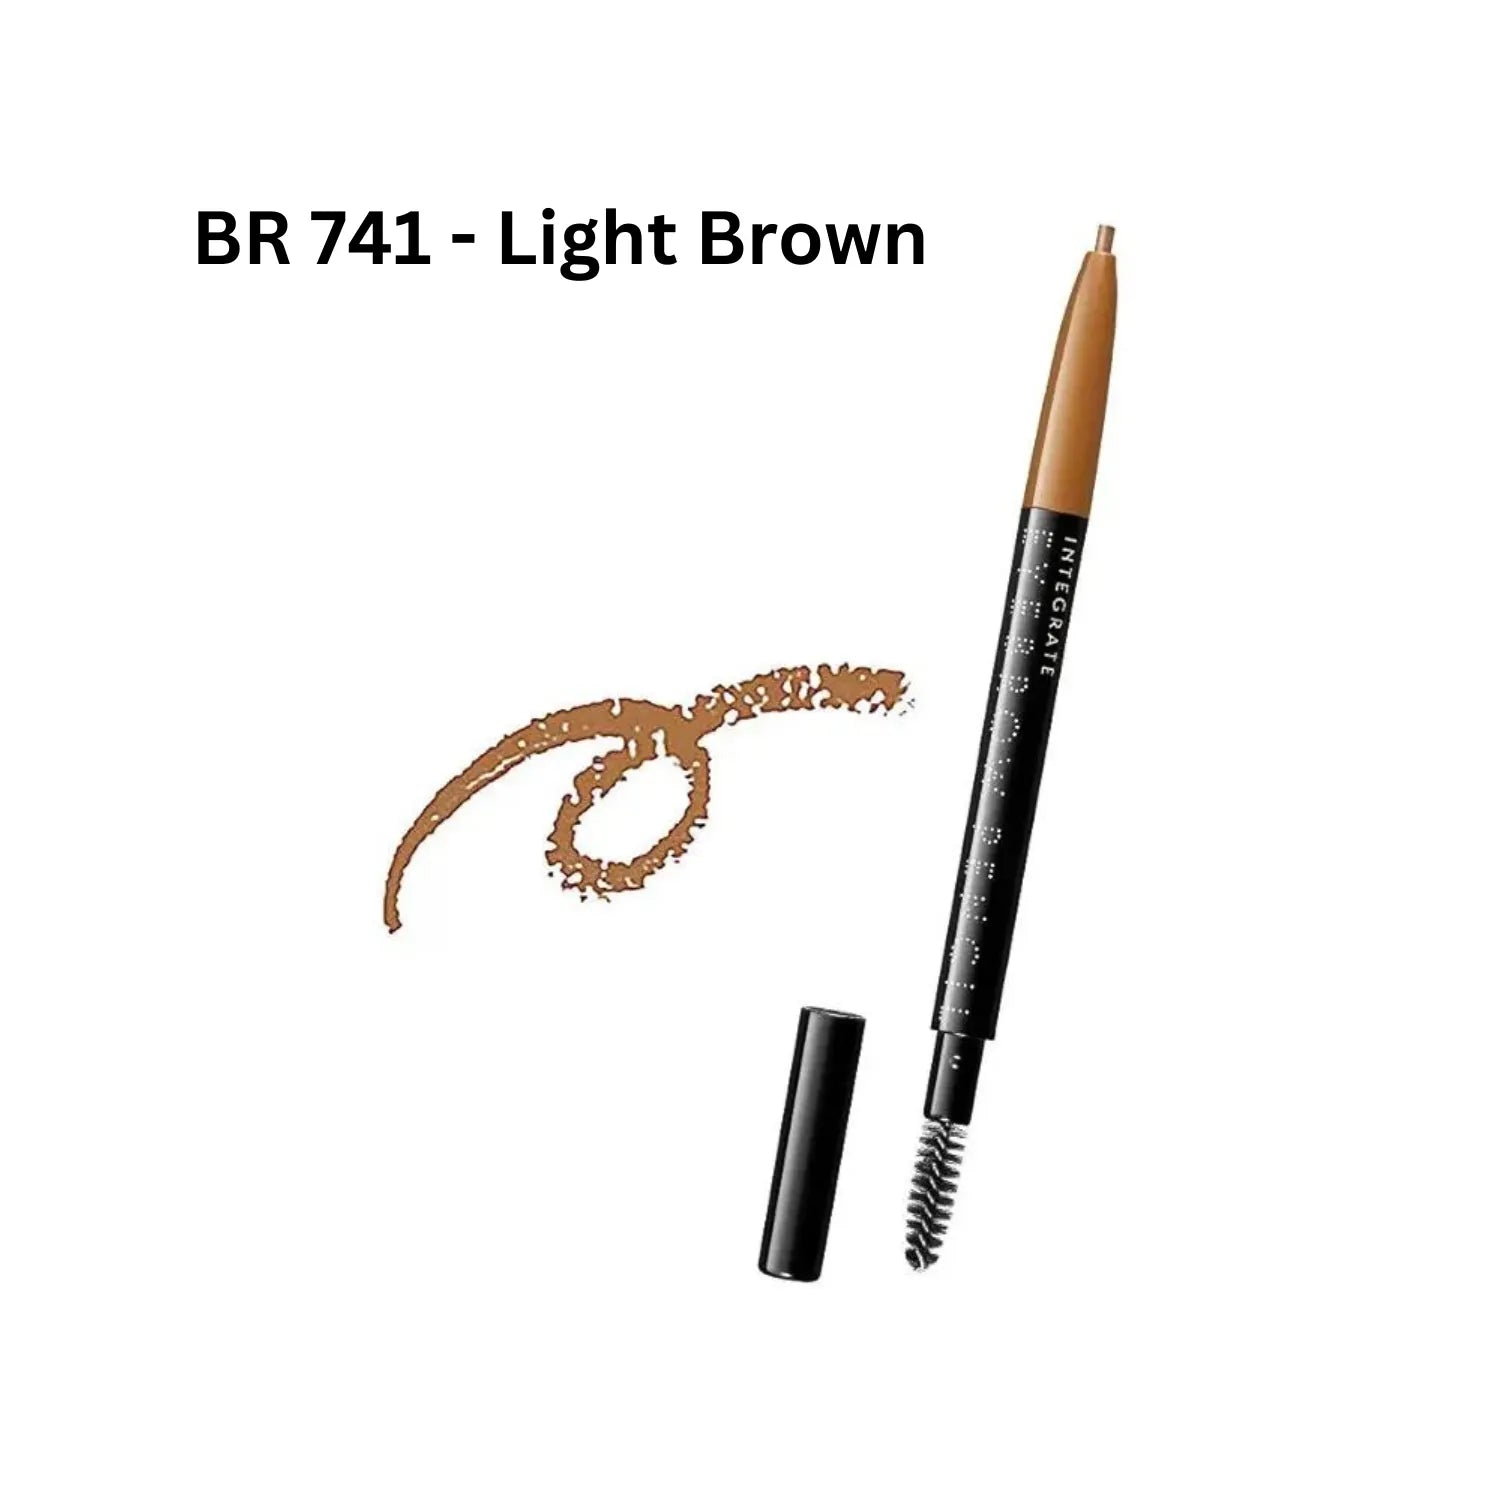 BR 741 - Light Brown